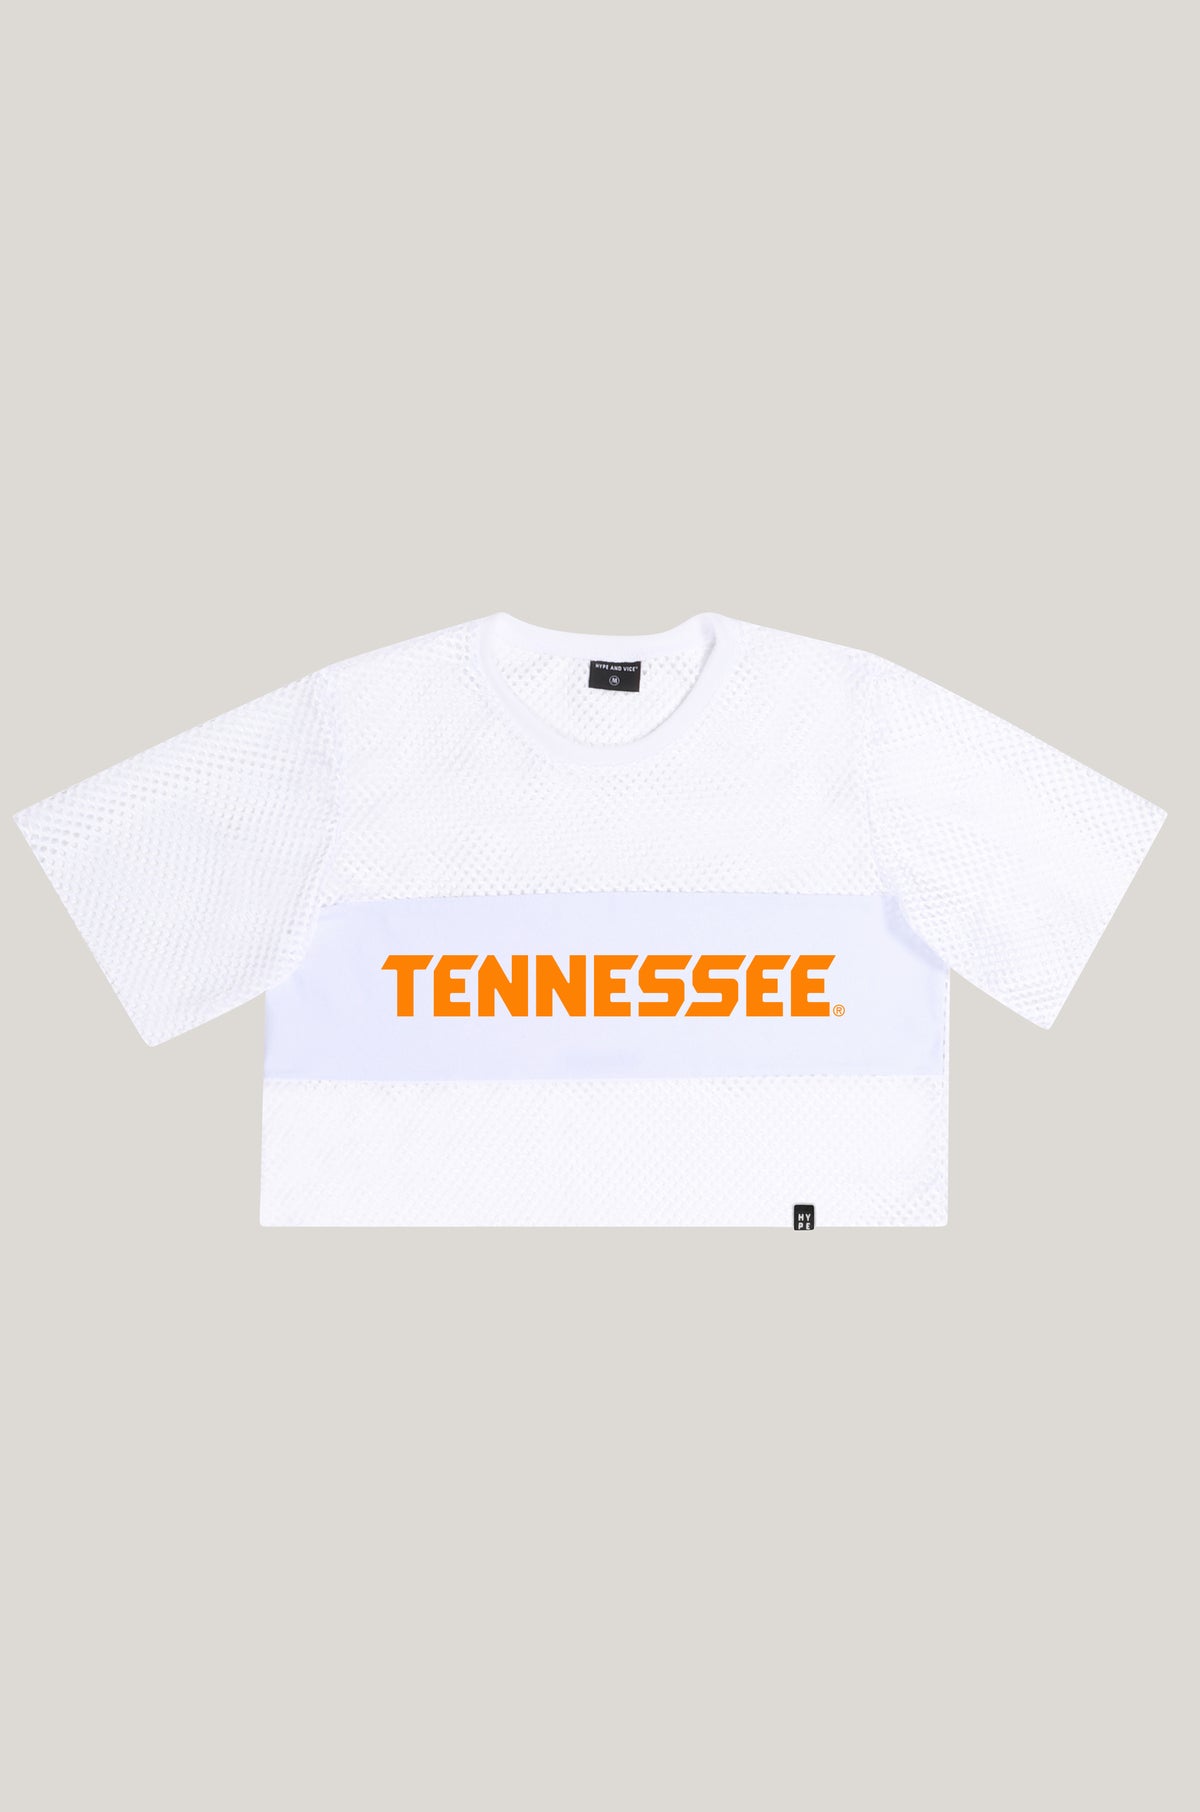 Tennessee Mesh Tee